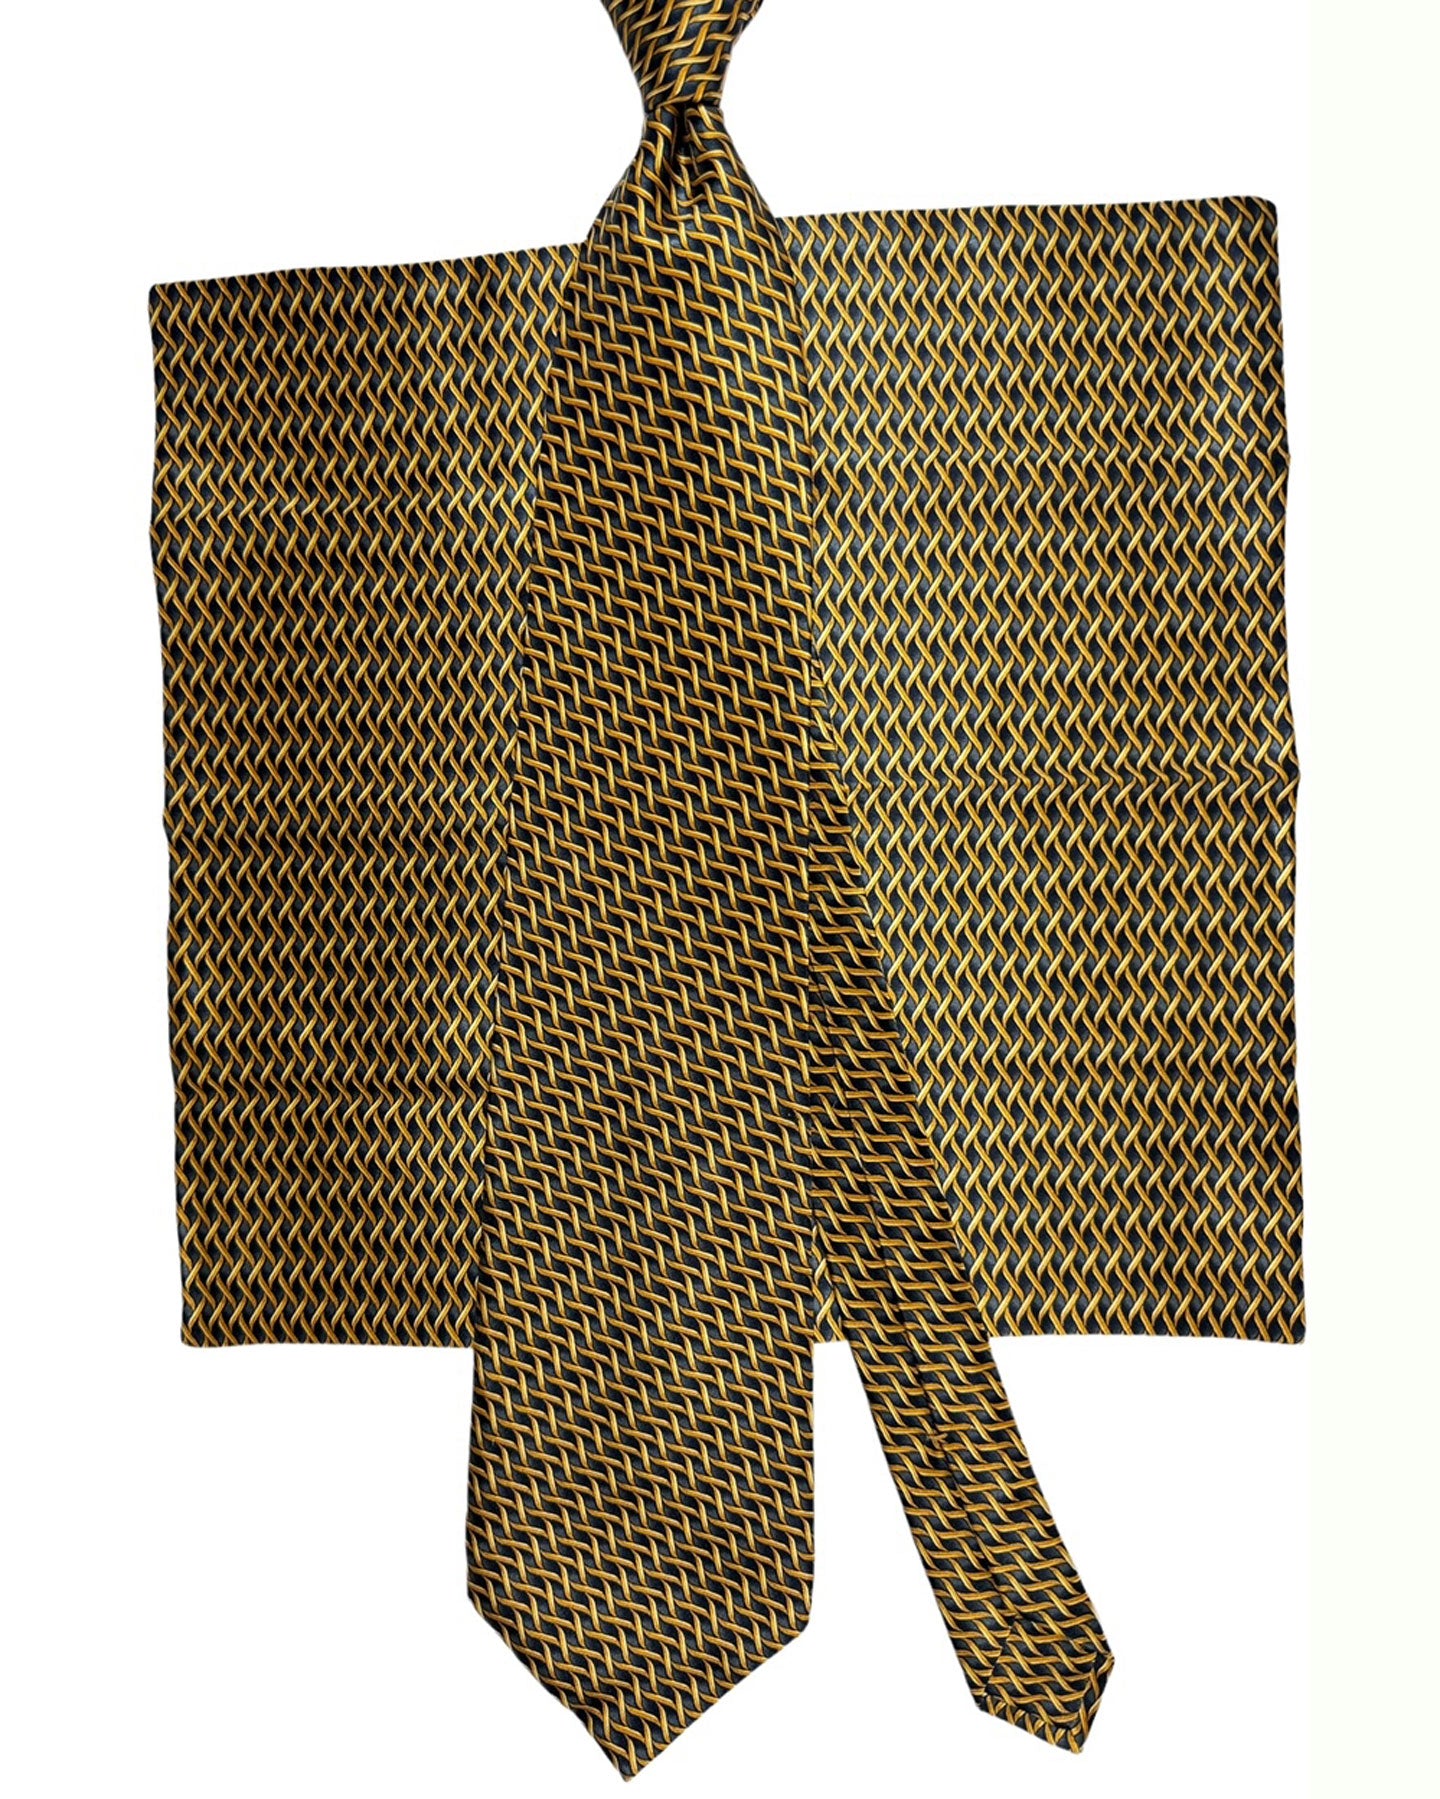 Zilli Tie & Matching Pocket Square Set Black Gold Swirl Design